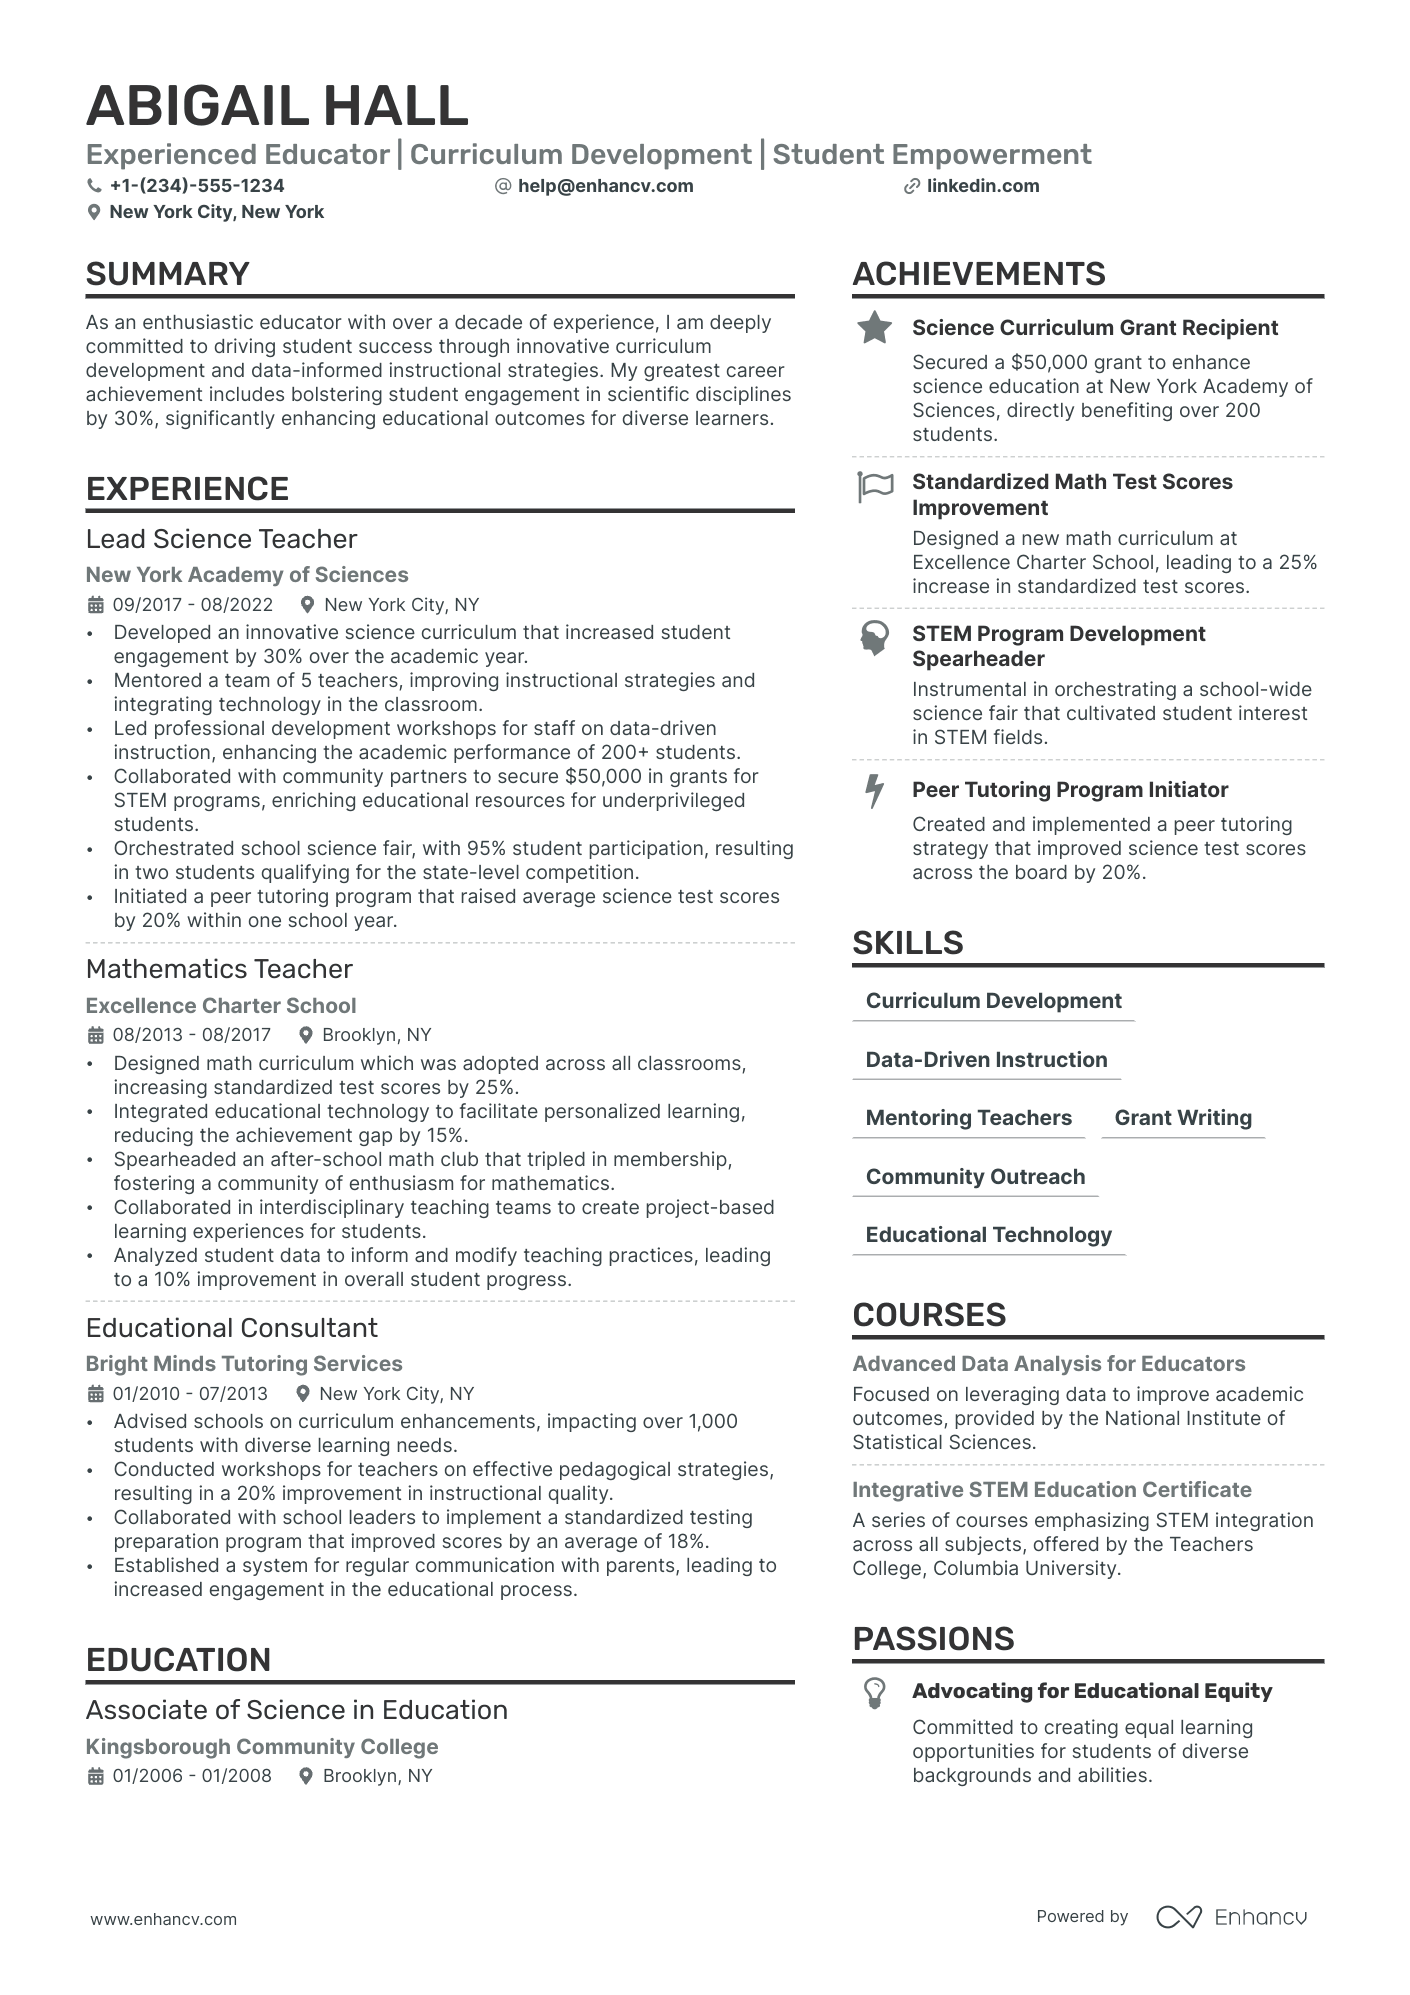 prepare resume for teaching job